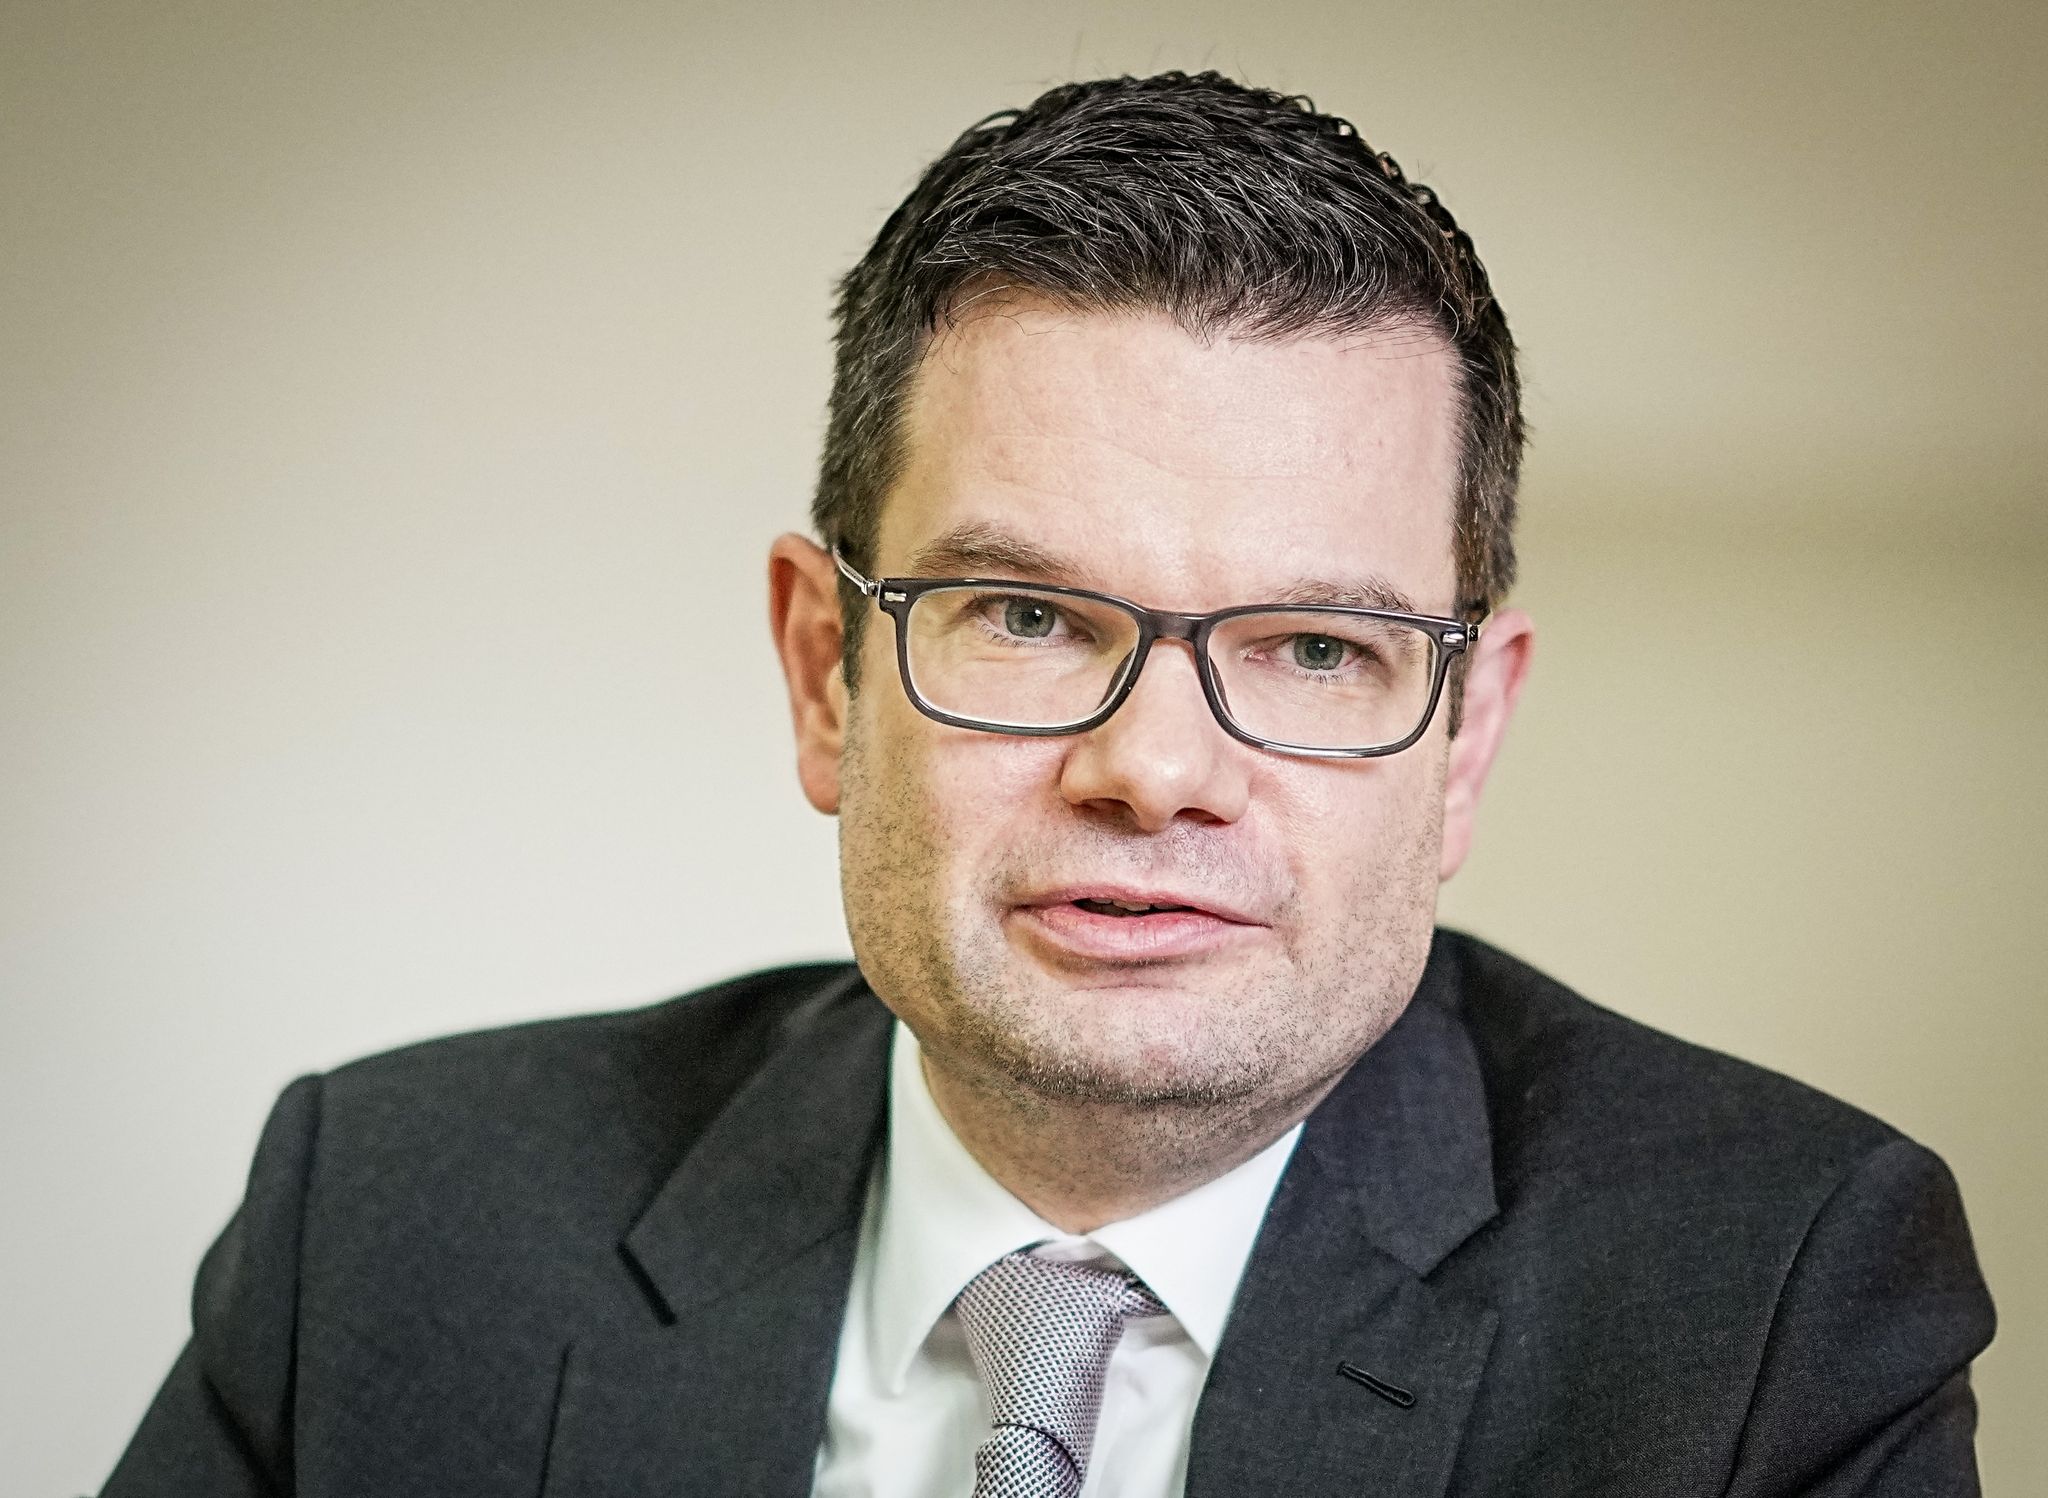 FDP-Politiker und Bundesjustizminister: Marco Buschmann. (© Michael Kappeler/dpa)